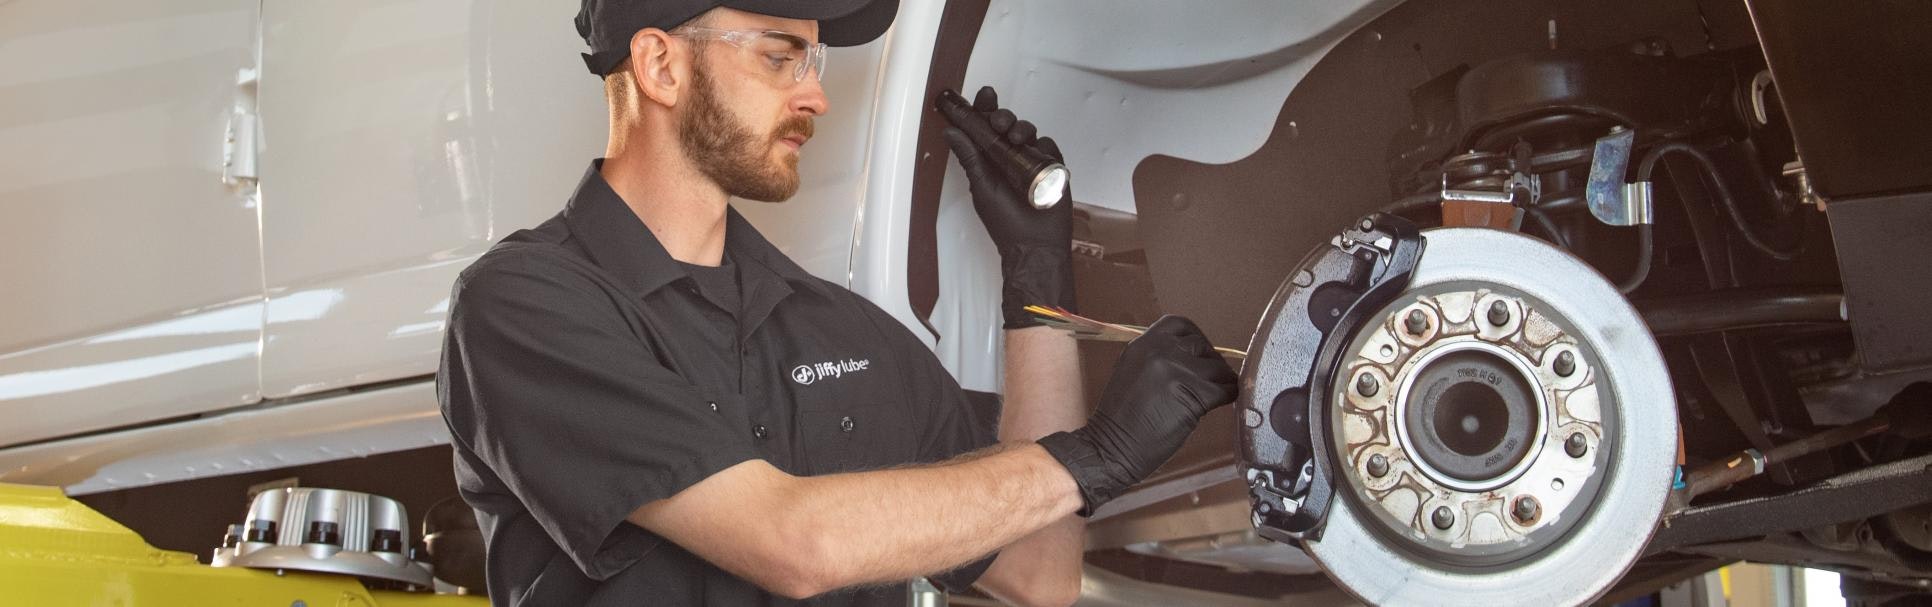 jiffy lube employee inspecting a vehicle's anti lock brake